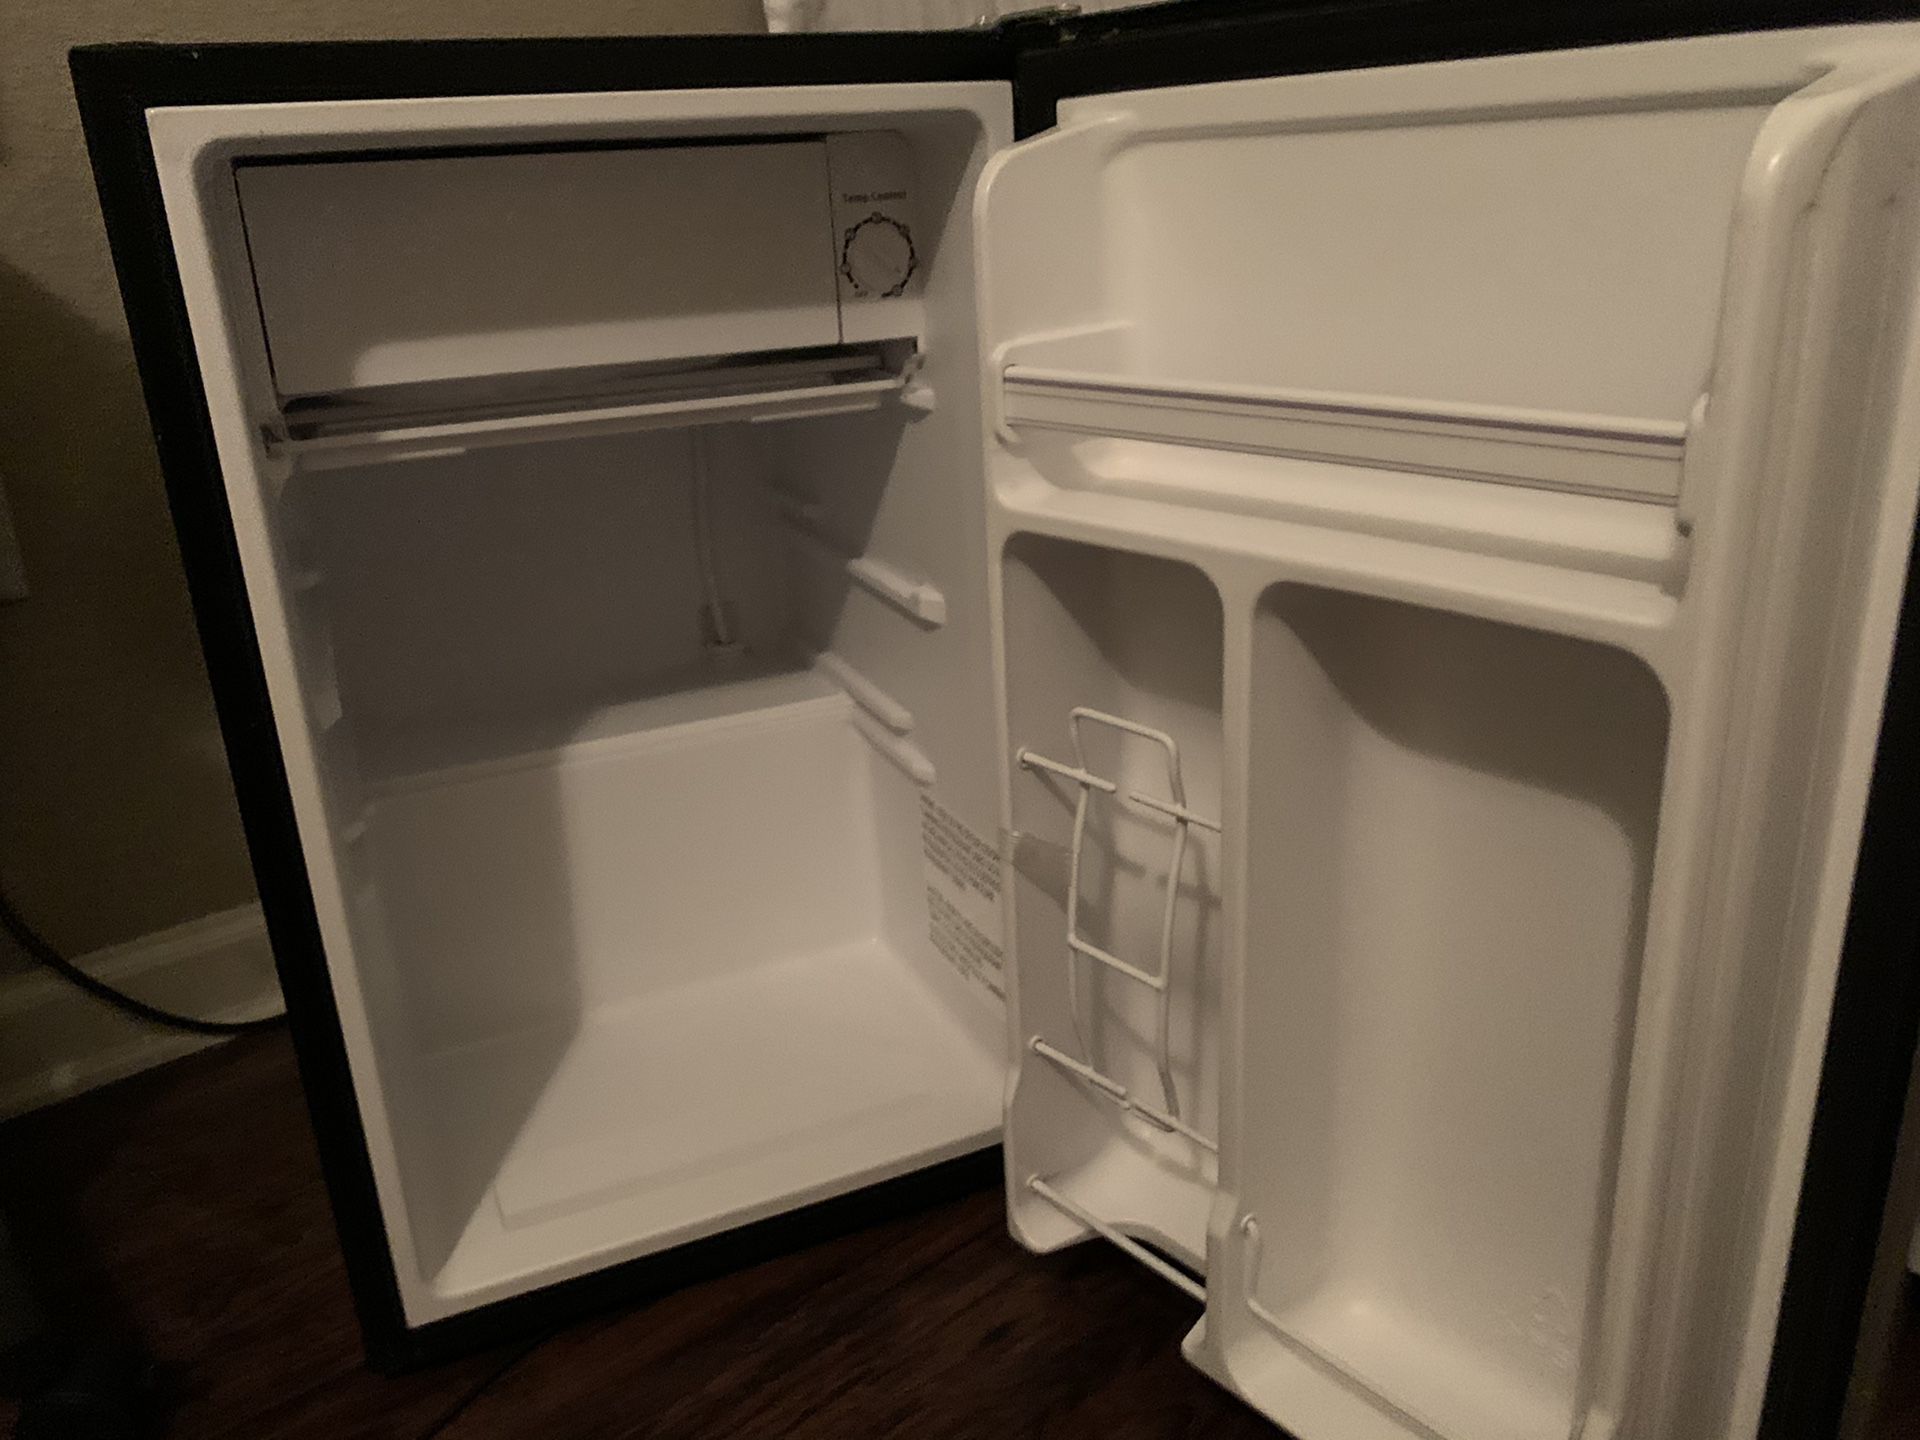 Black and silver Mini fridge